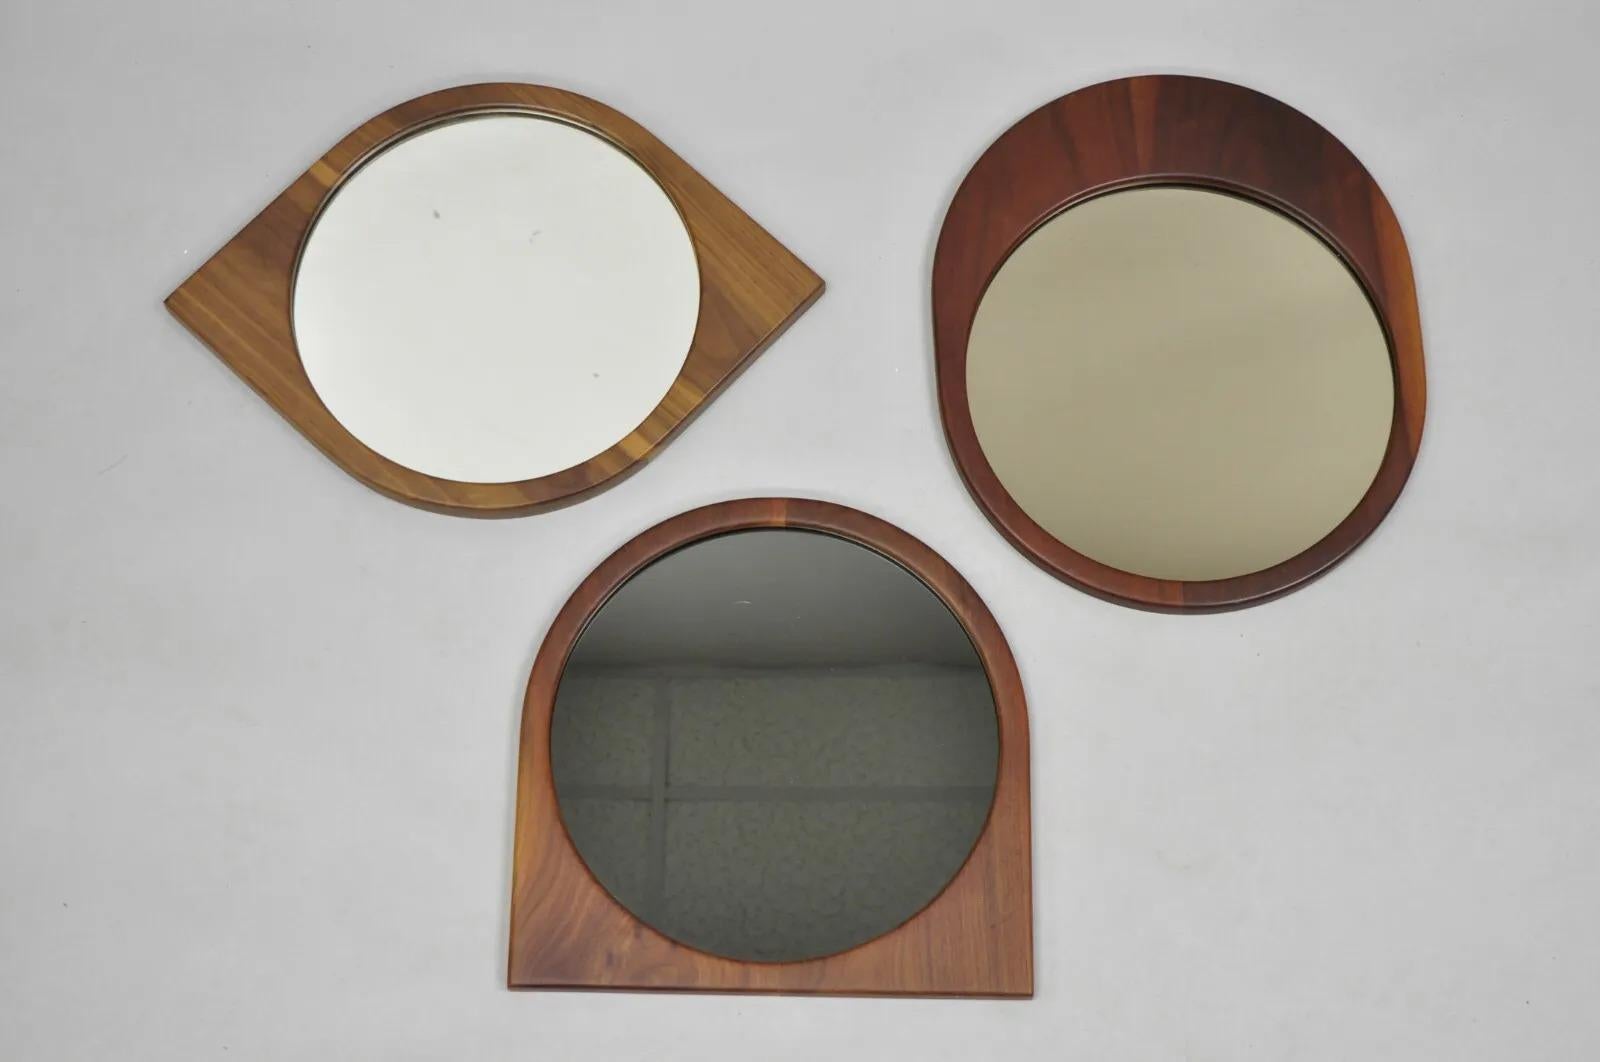 Mid Century Danish Modern Sculpted Teak Wood Mirrors - 3 pc Set For Sale 7